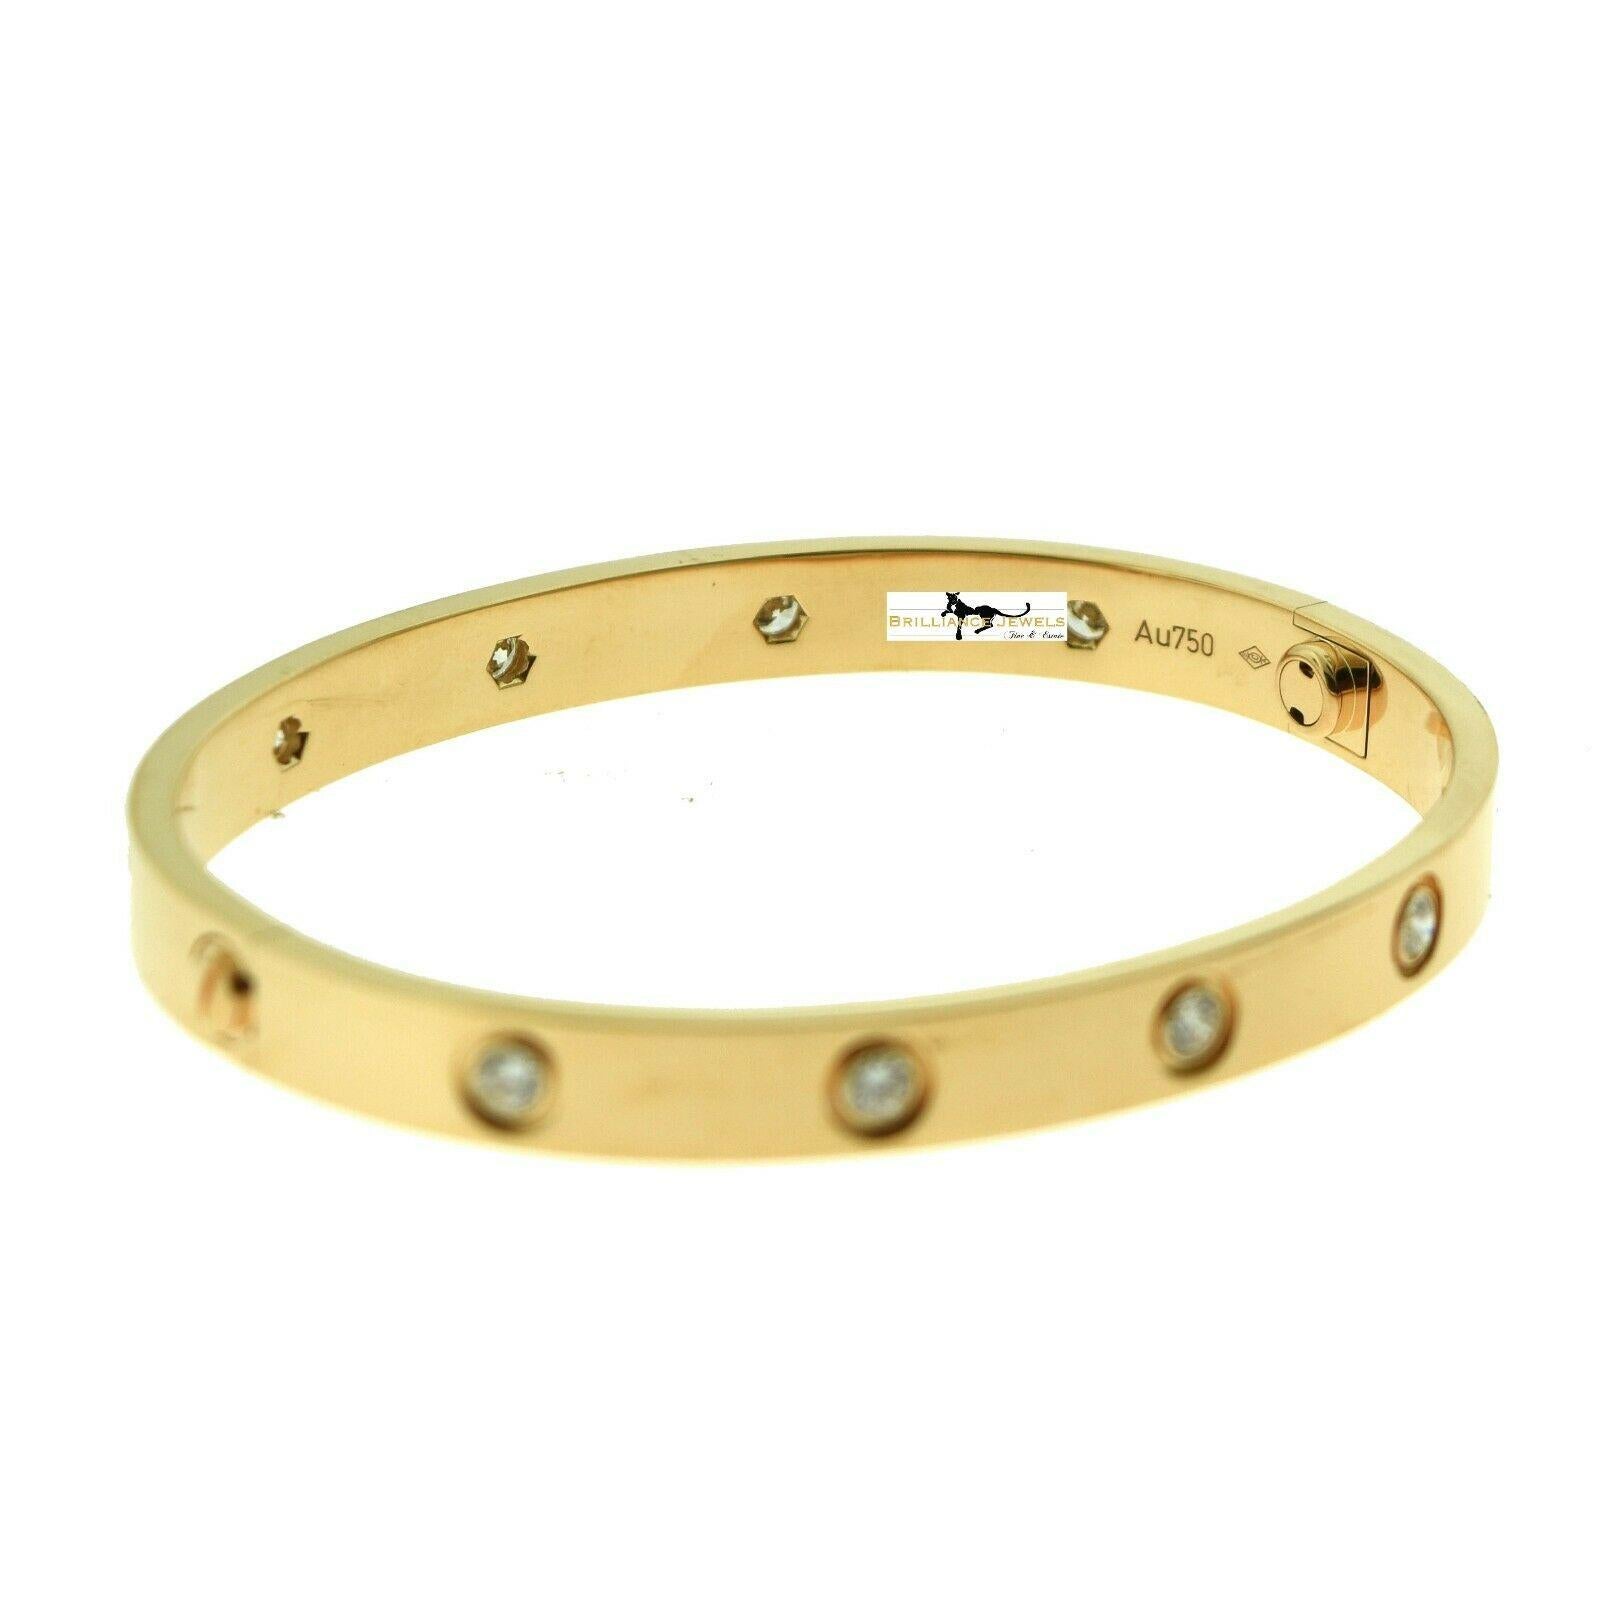 Designer: Cartier

Collection: Love

Style: Bangle Bracelet

Metal: Rose Gold

Metal Purity: 18k

Bracelet Size: 17 = 17 cm

Stones: 10 Round Brilliant Cut Diamonds

Hallmarks: 17, Au750 Cartier, Serial No.,

Screw System: 